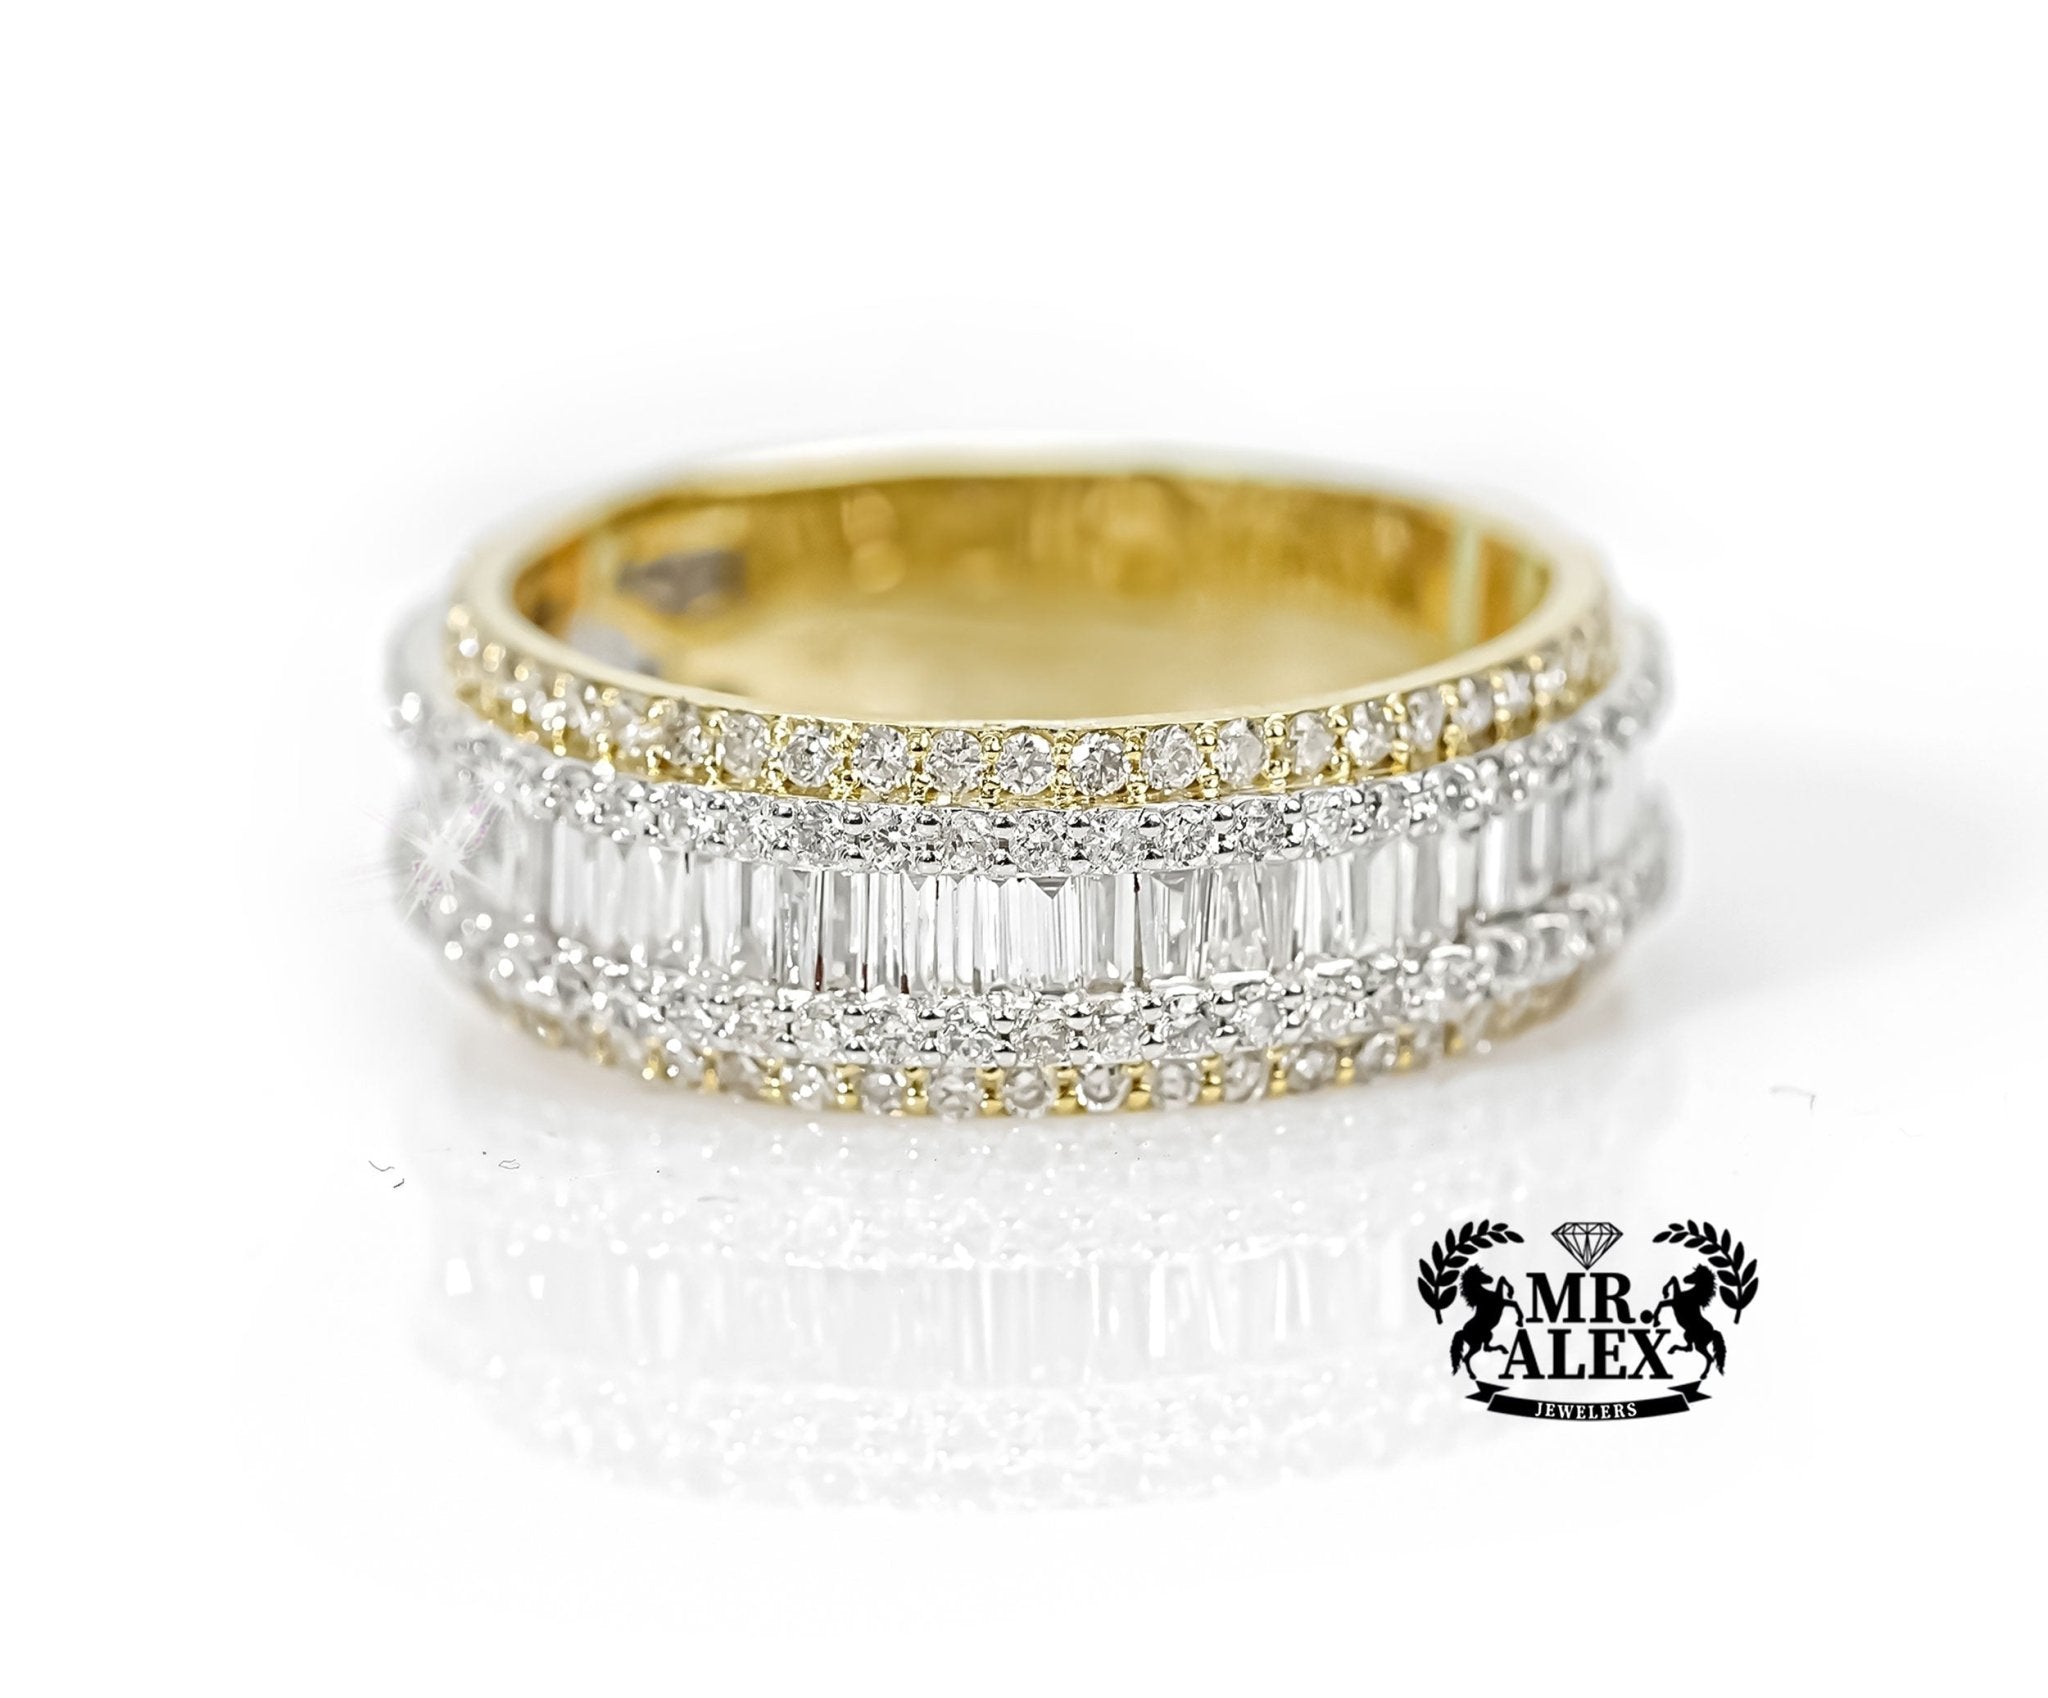 10k Gold Baguette Center Diamond Ring 1.95ct - Mr. Alex Jewelry